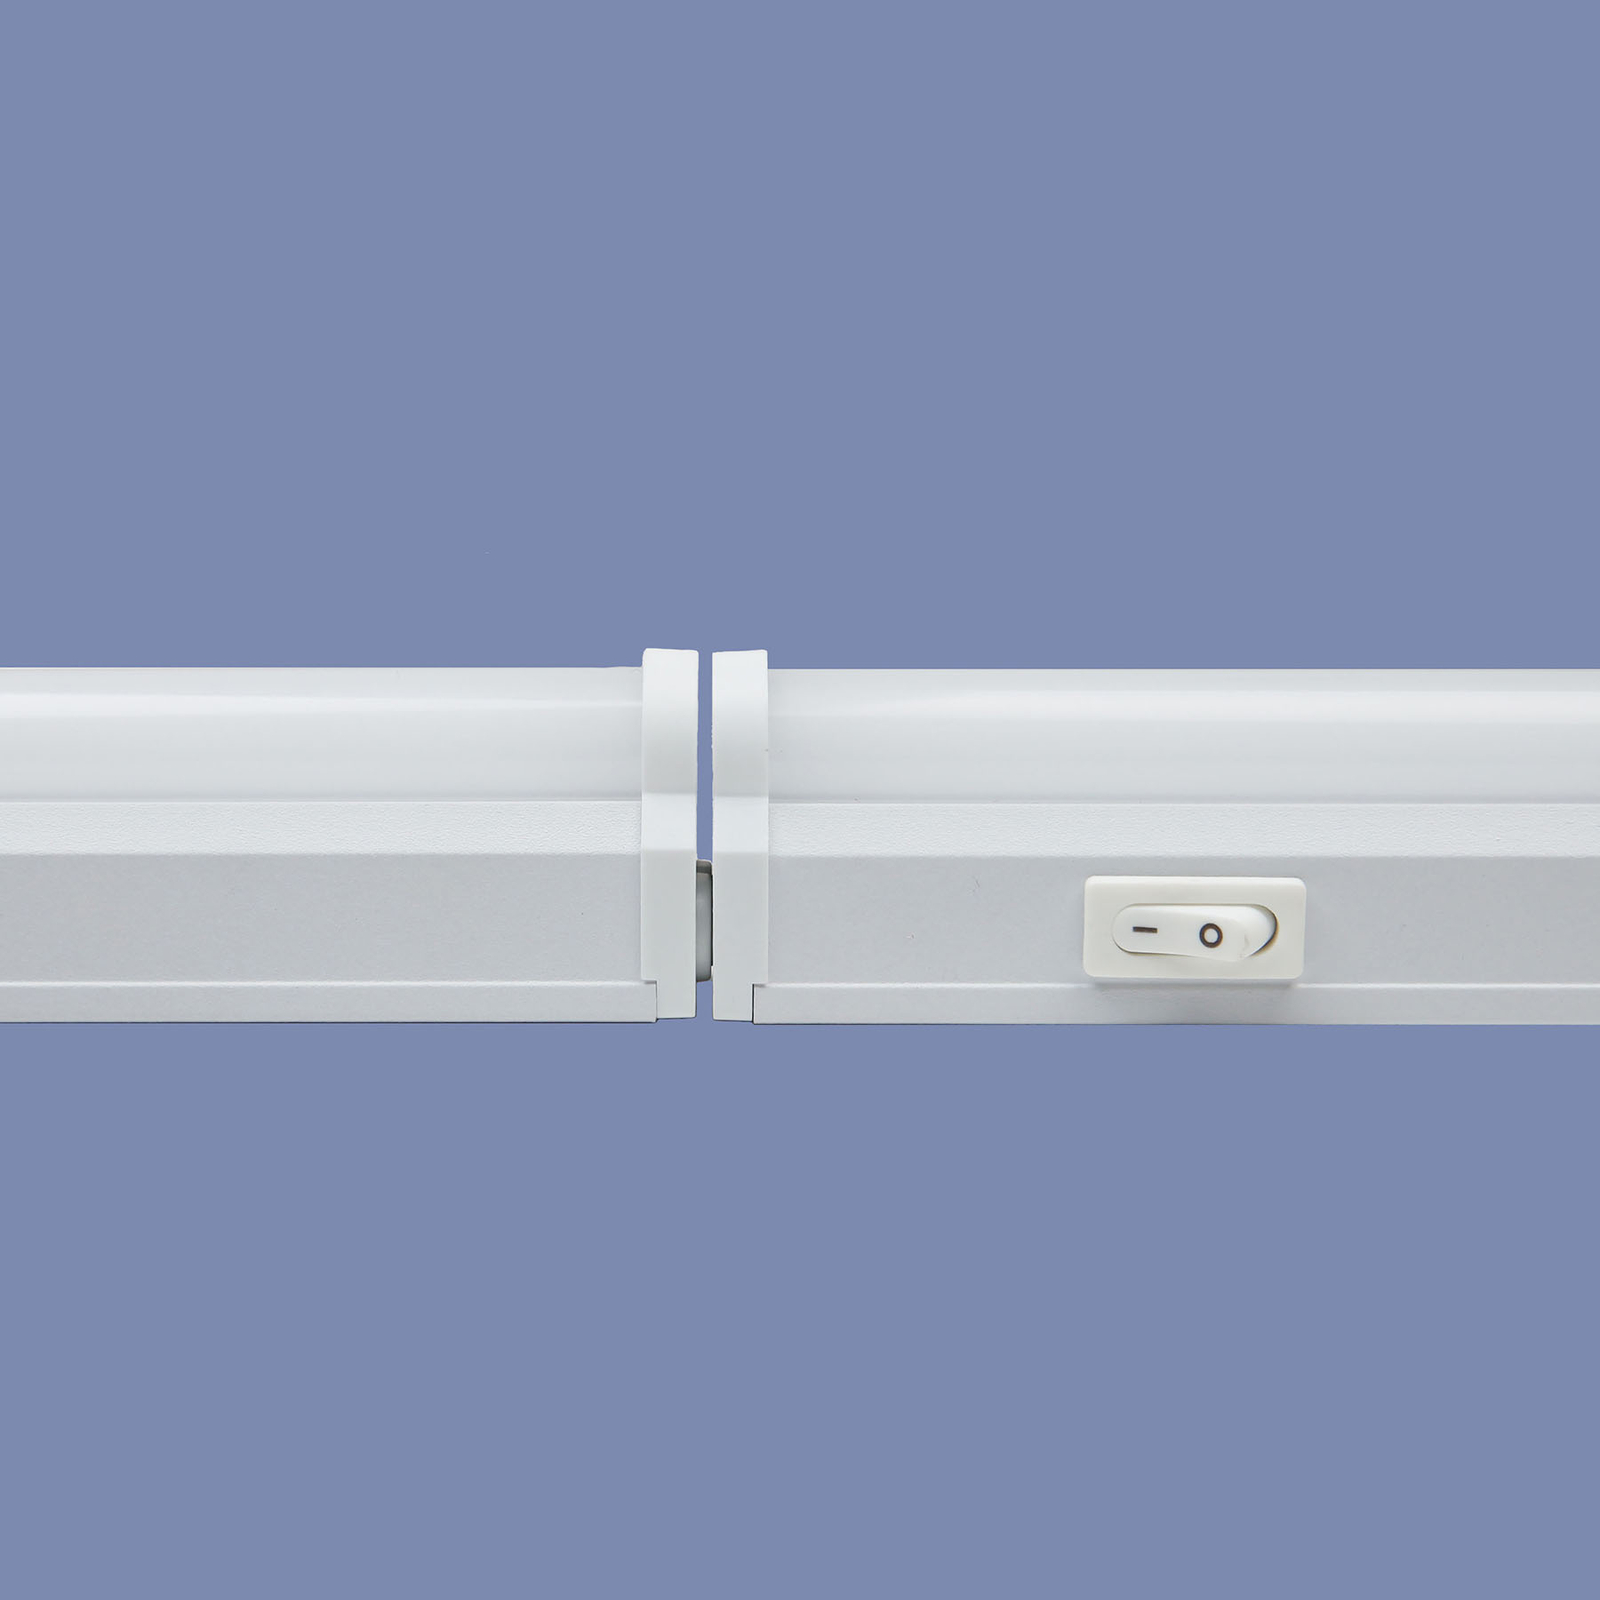 Barra de luz LED 982, longitud 31.5 cm